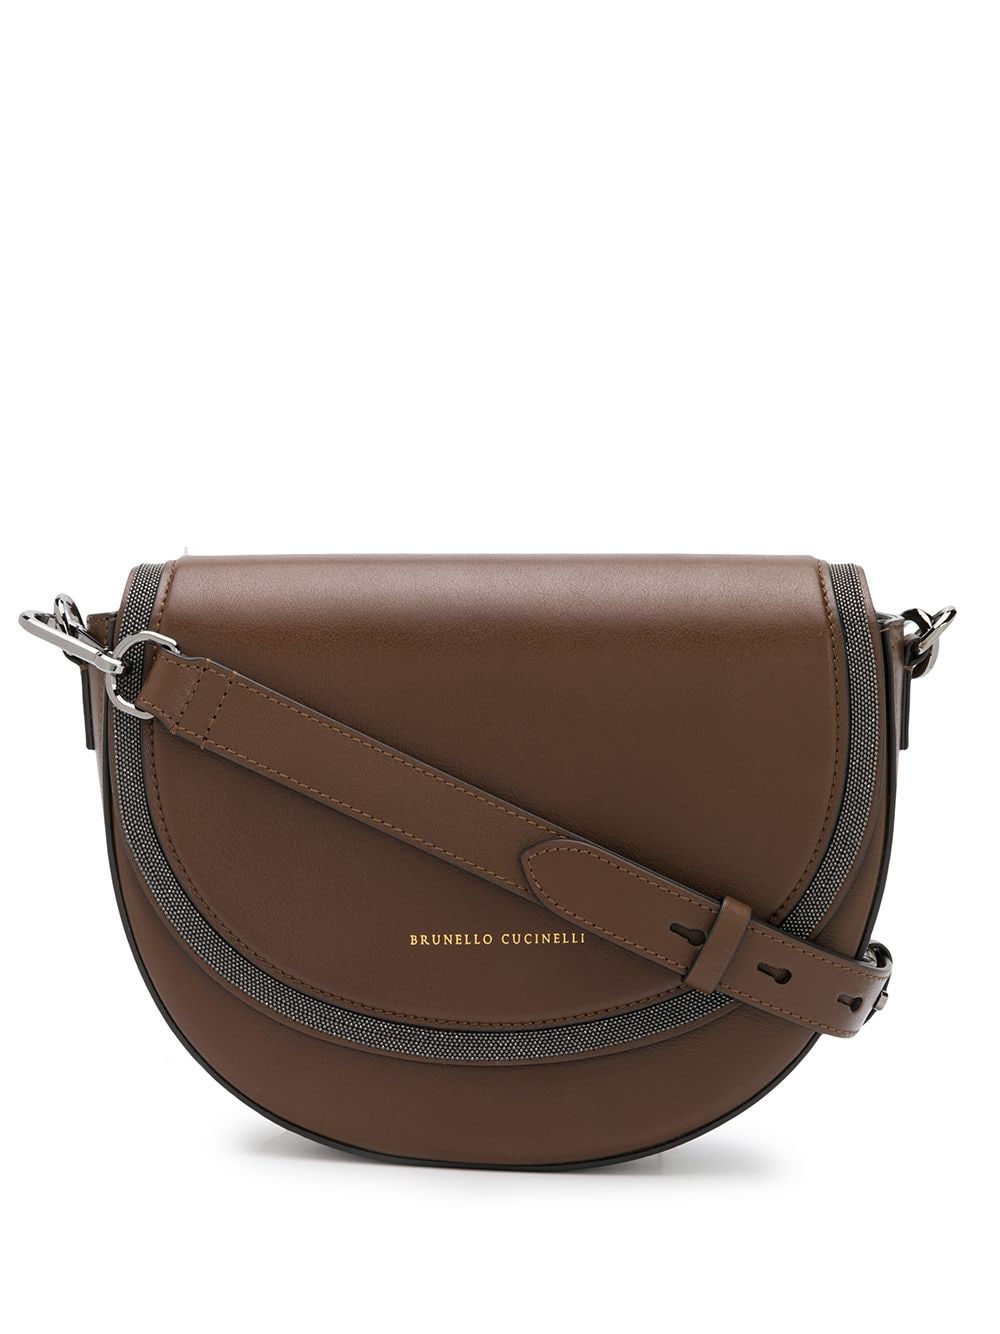 Brunello Cucinelli Embellished Crossbody Bag In Brown